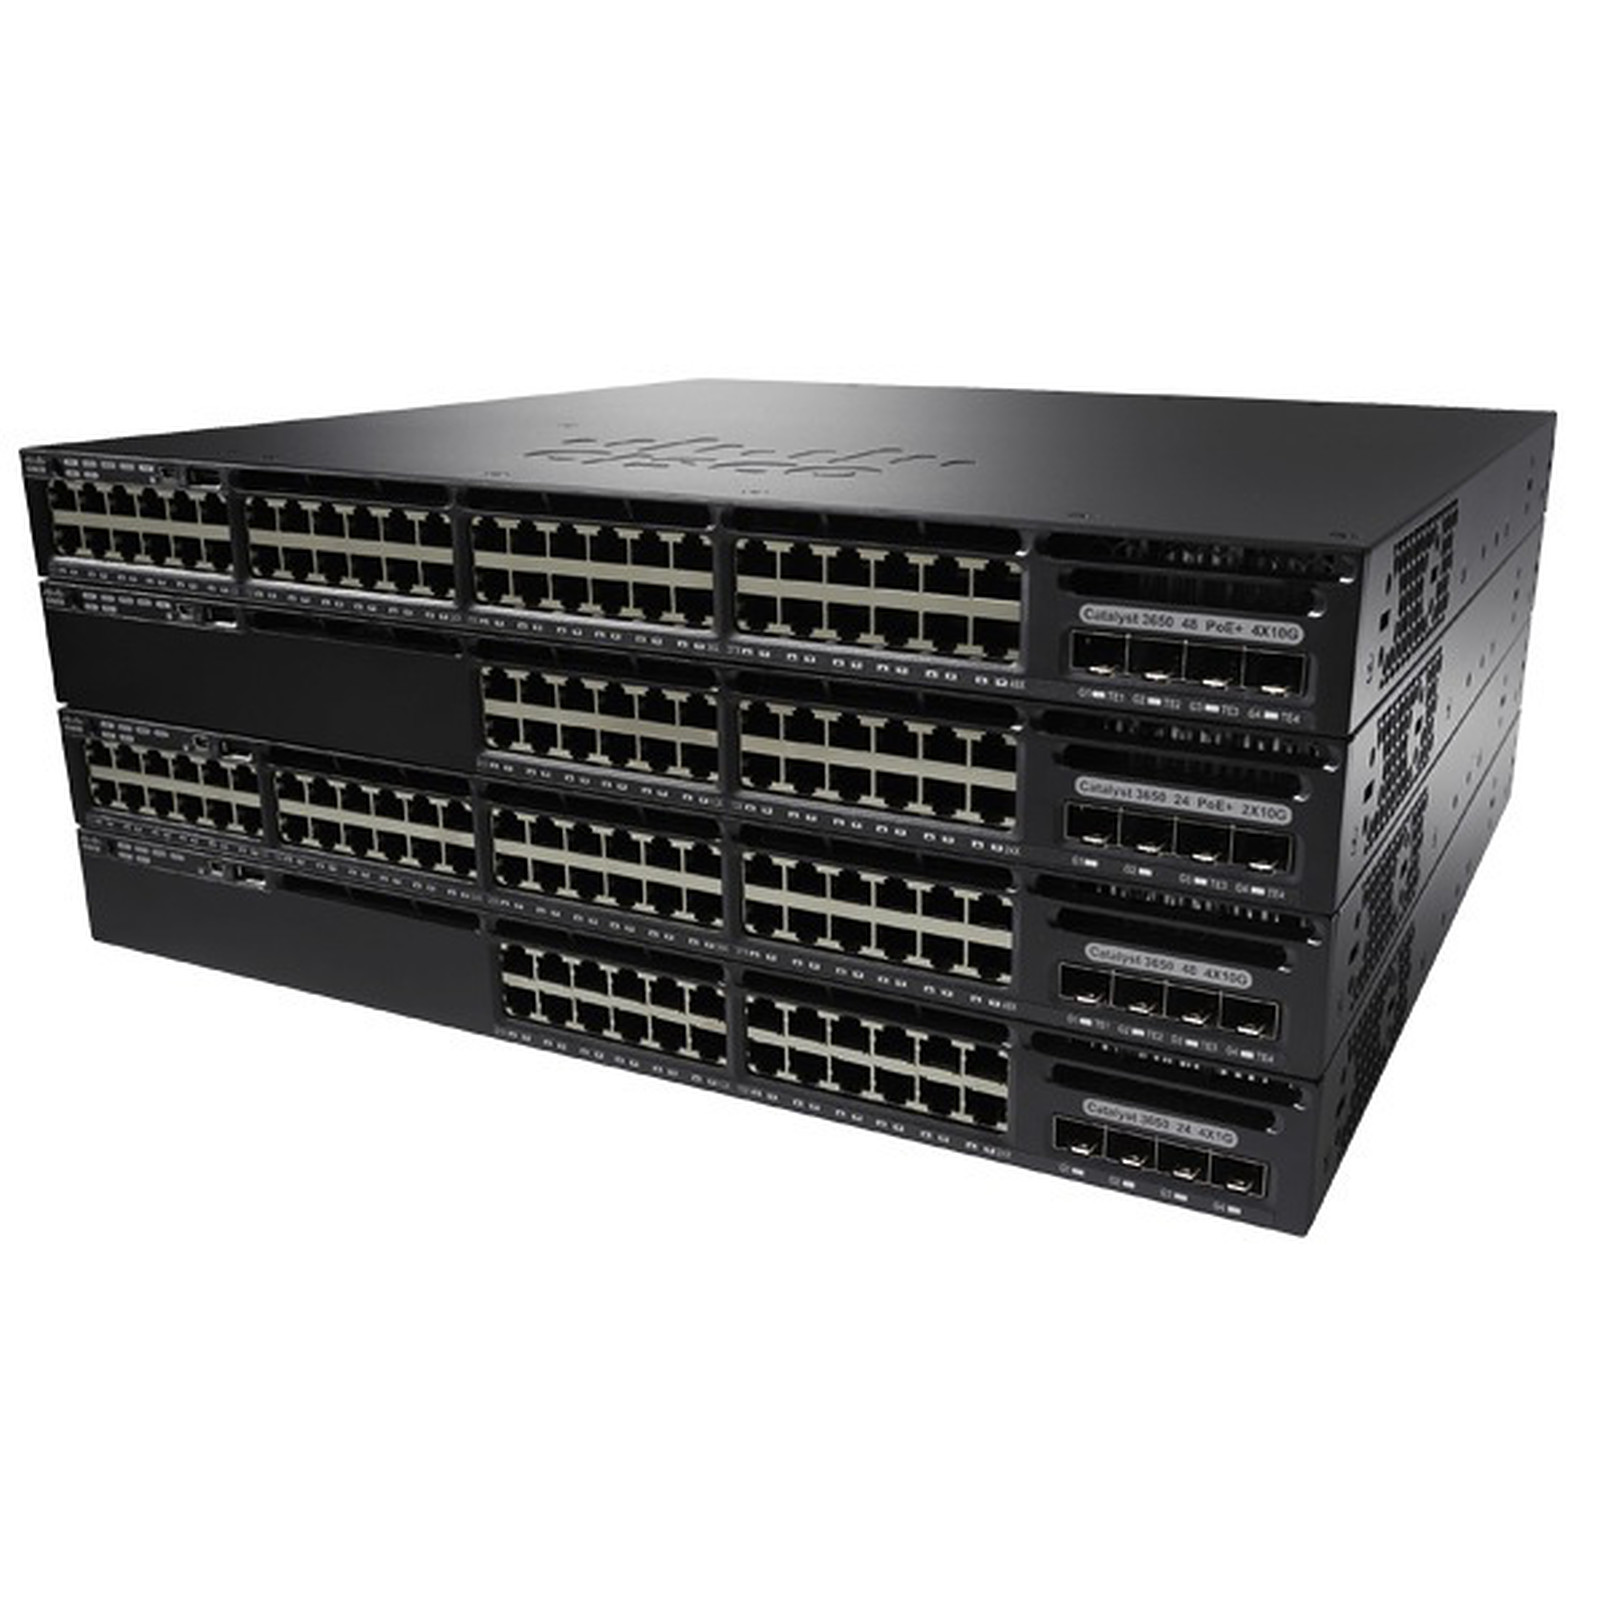 Cisco Catalyst C2960X-24PS-L - Switch Cisco Systems